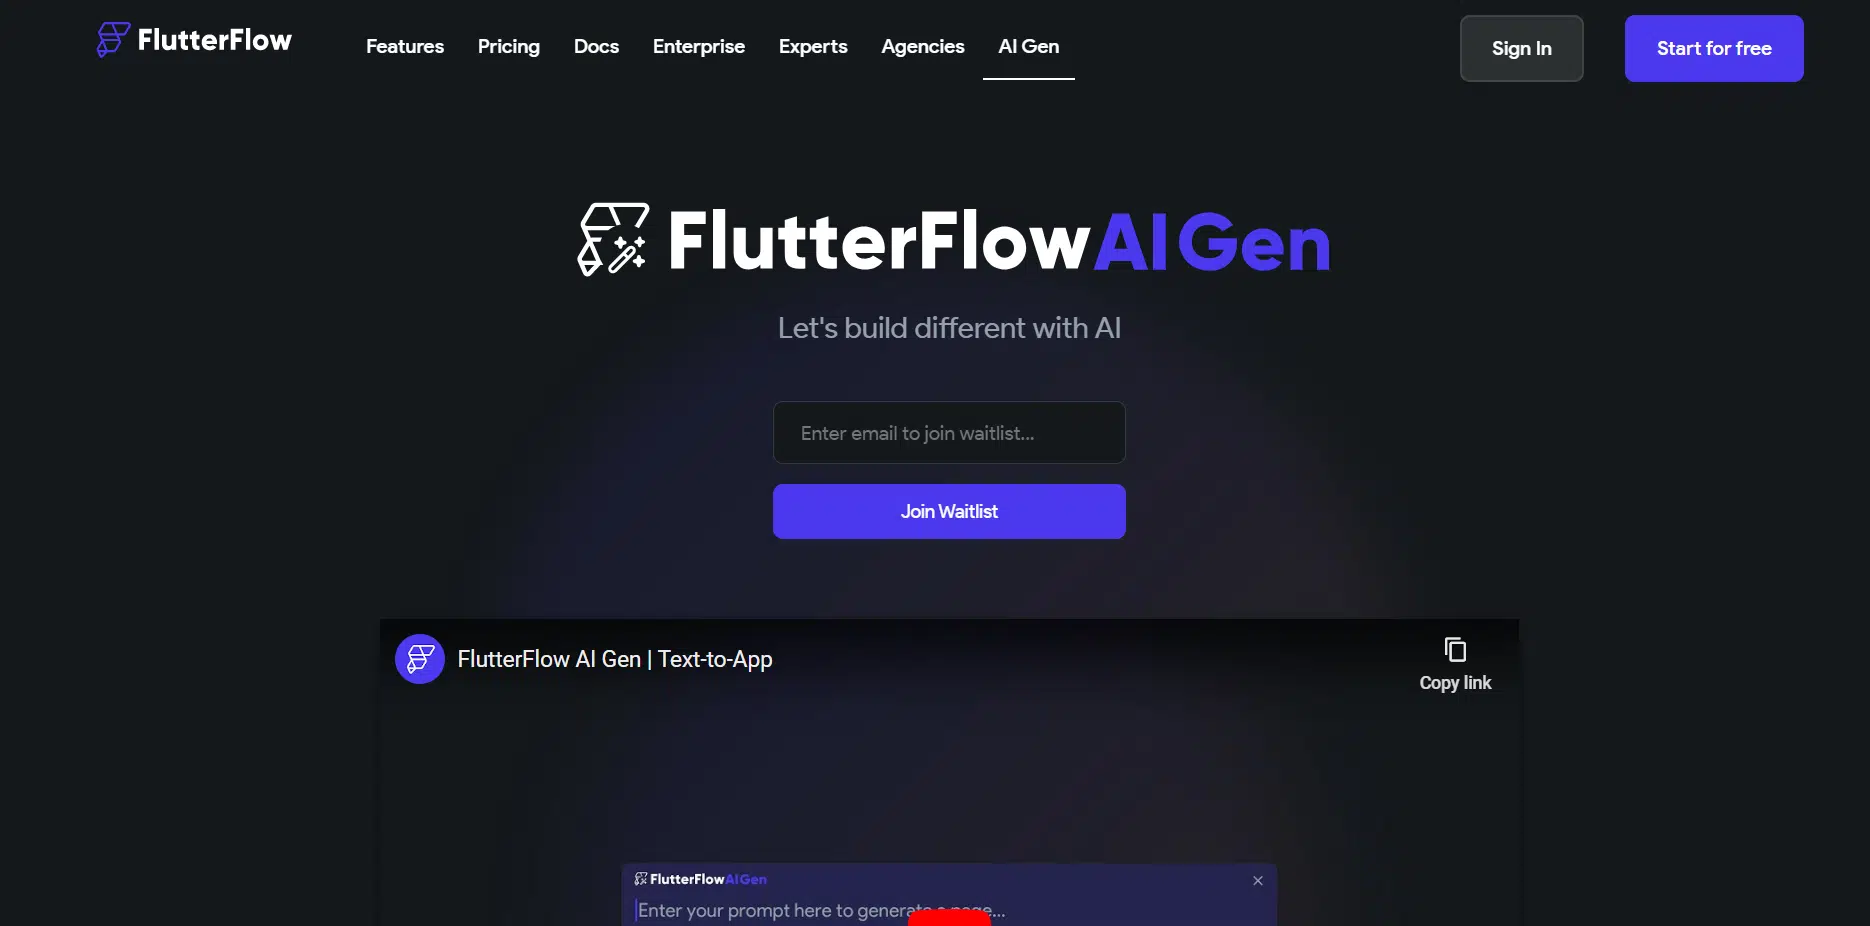 FlutterFlow AI Genwebsite picture